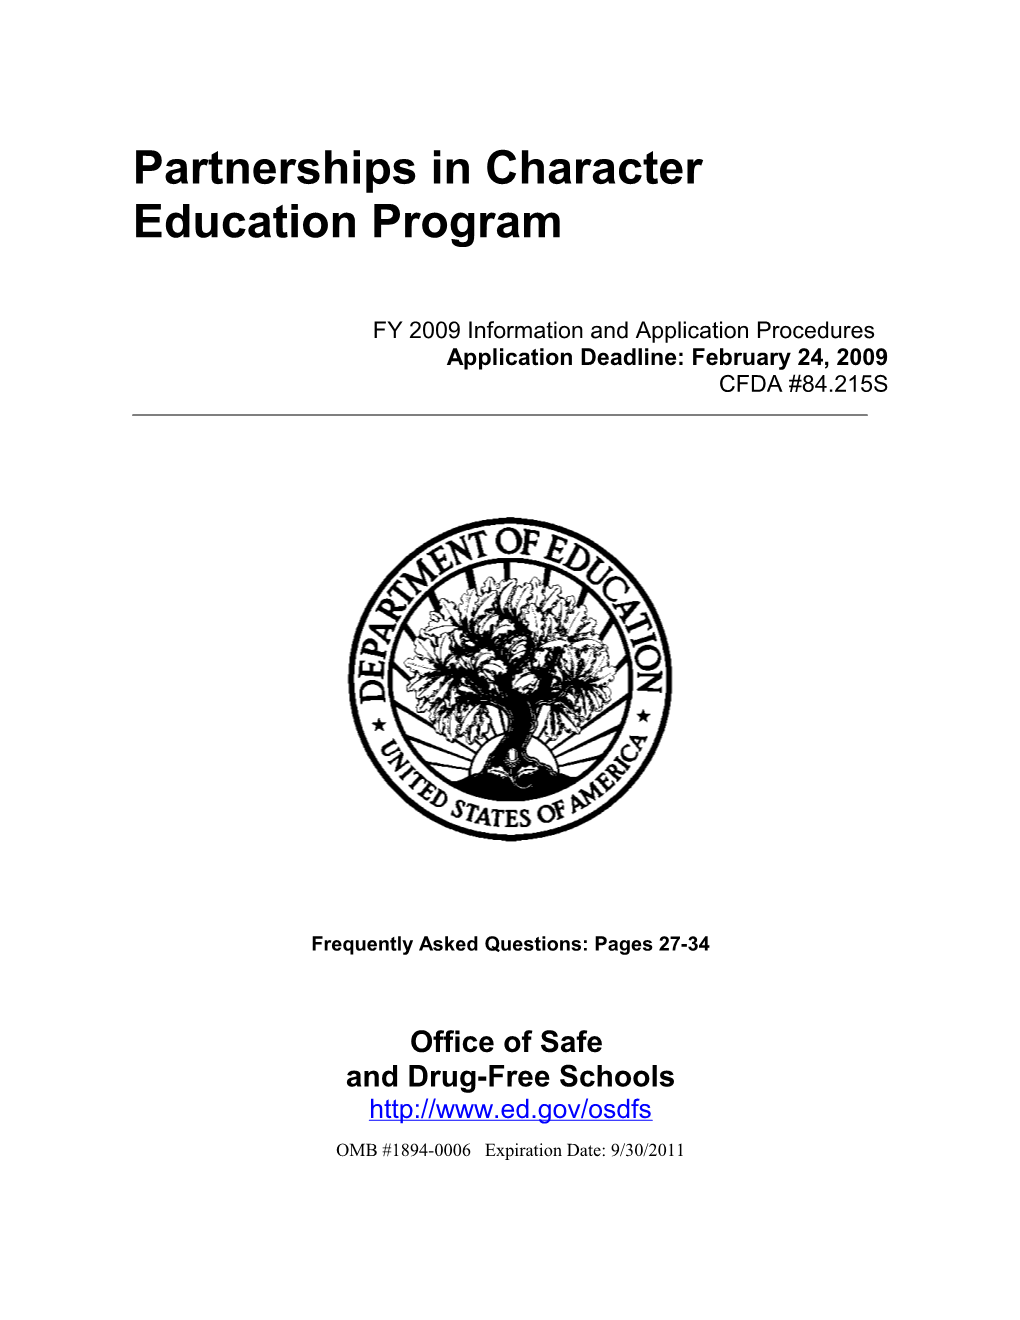 Partnerships in Character Education Program